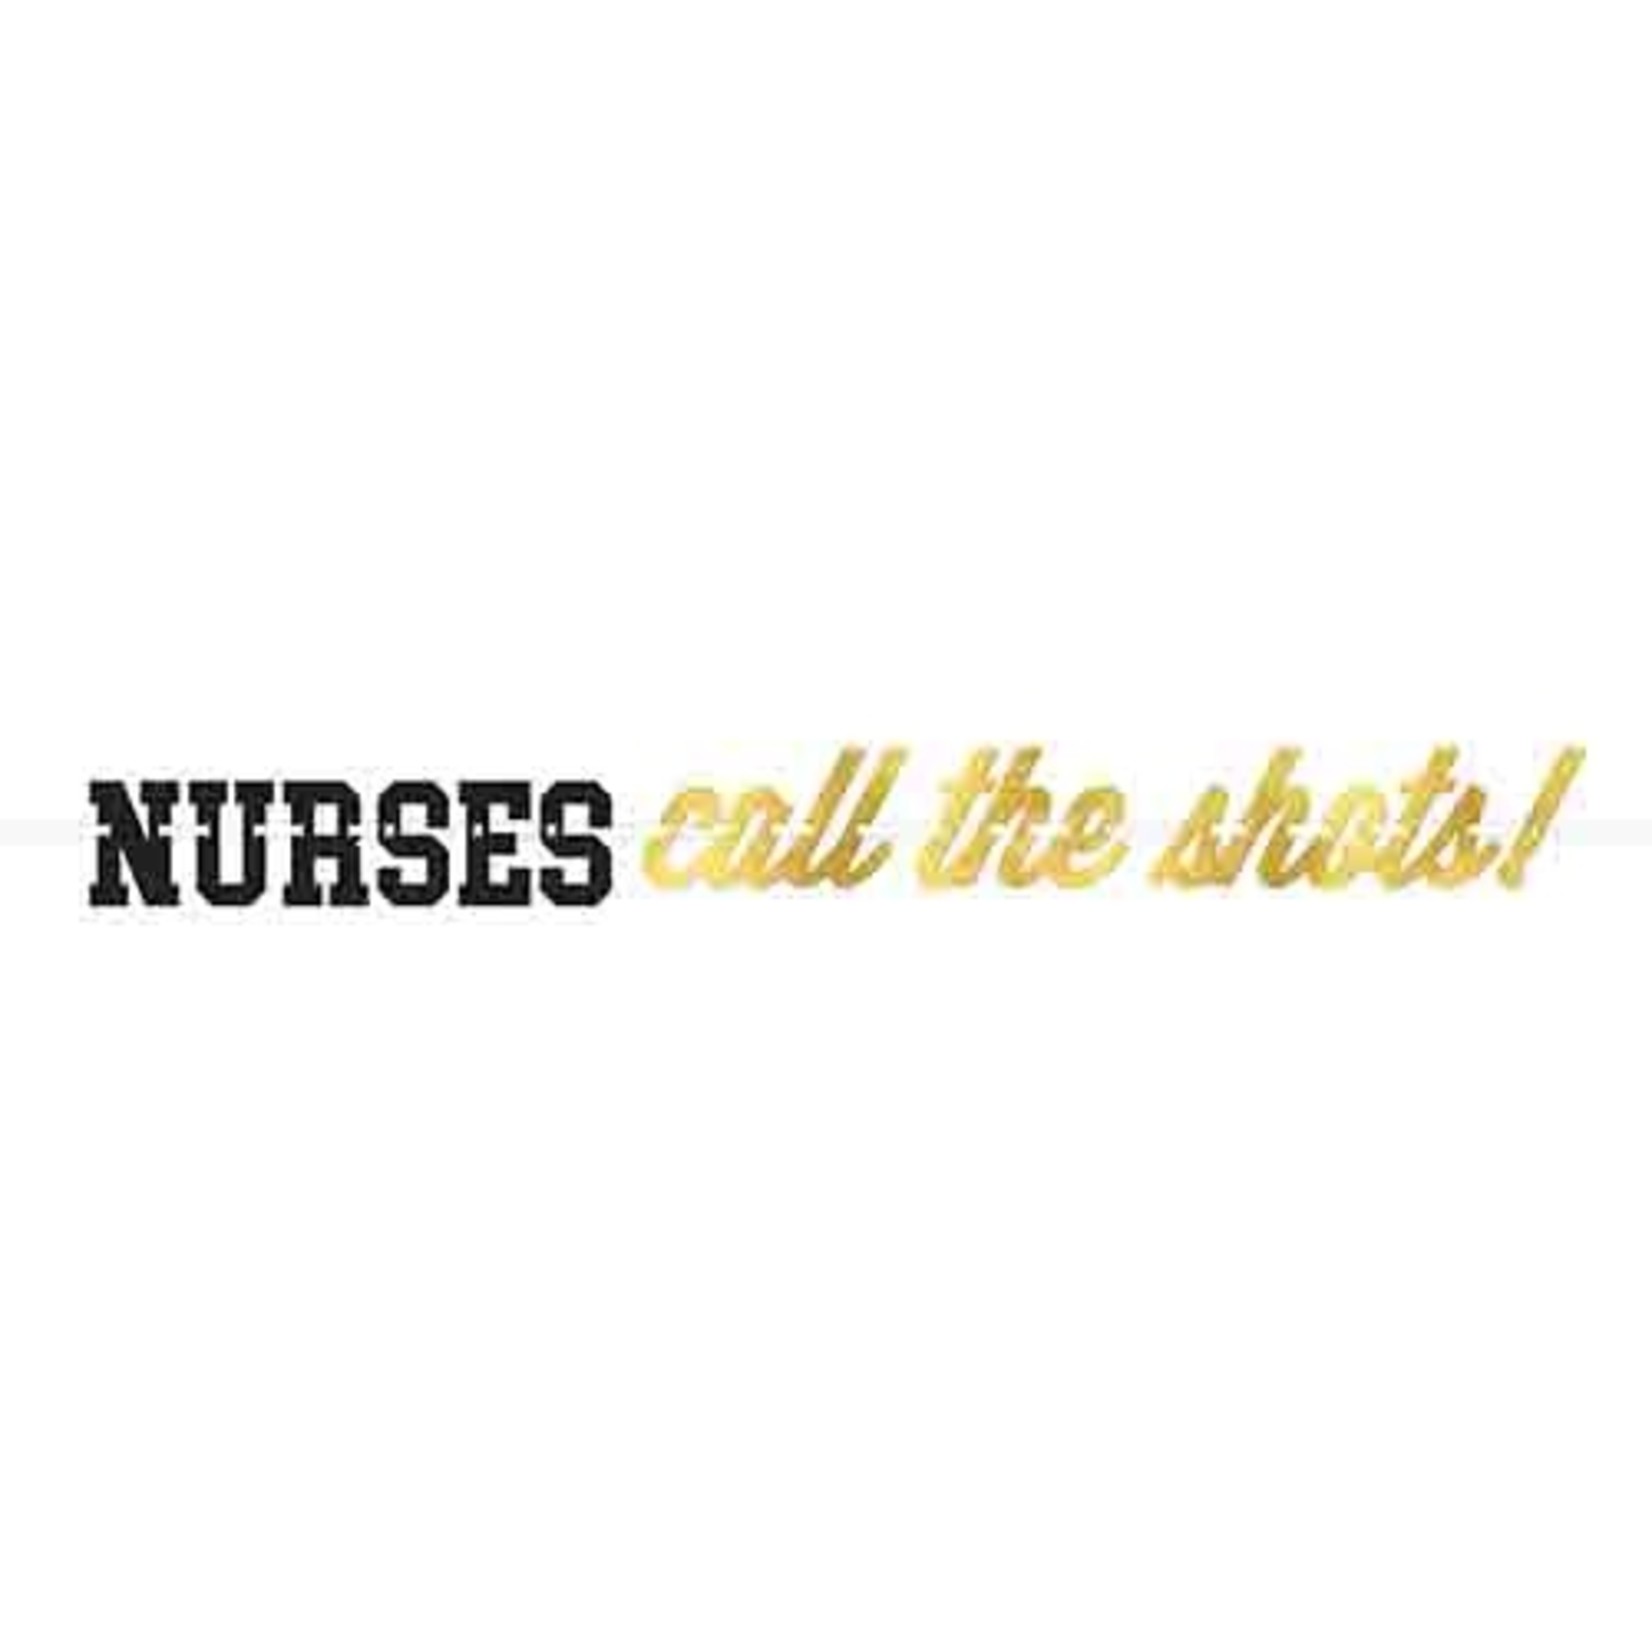 Amscan Nurses Call The Shots! Banner - 12ft.